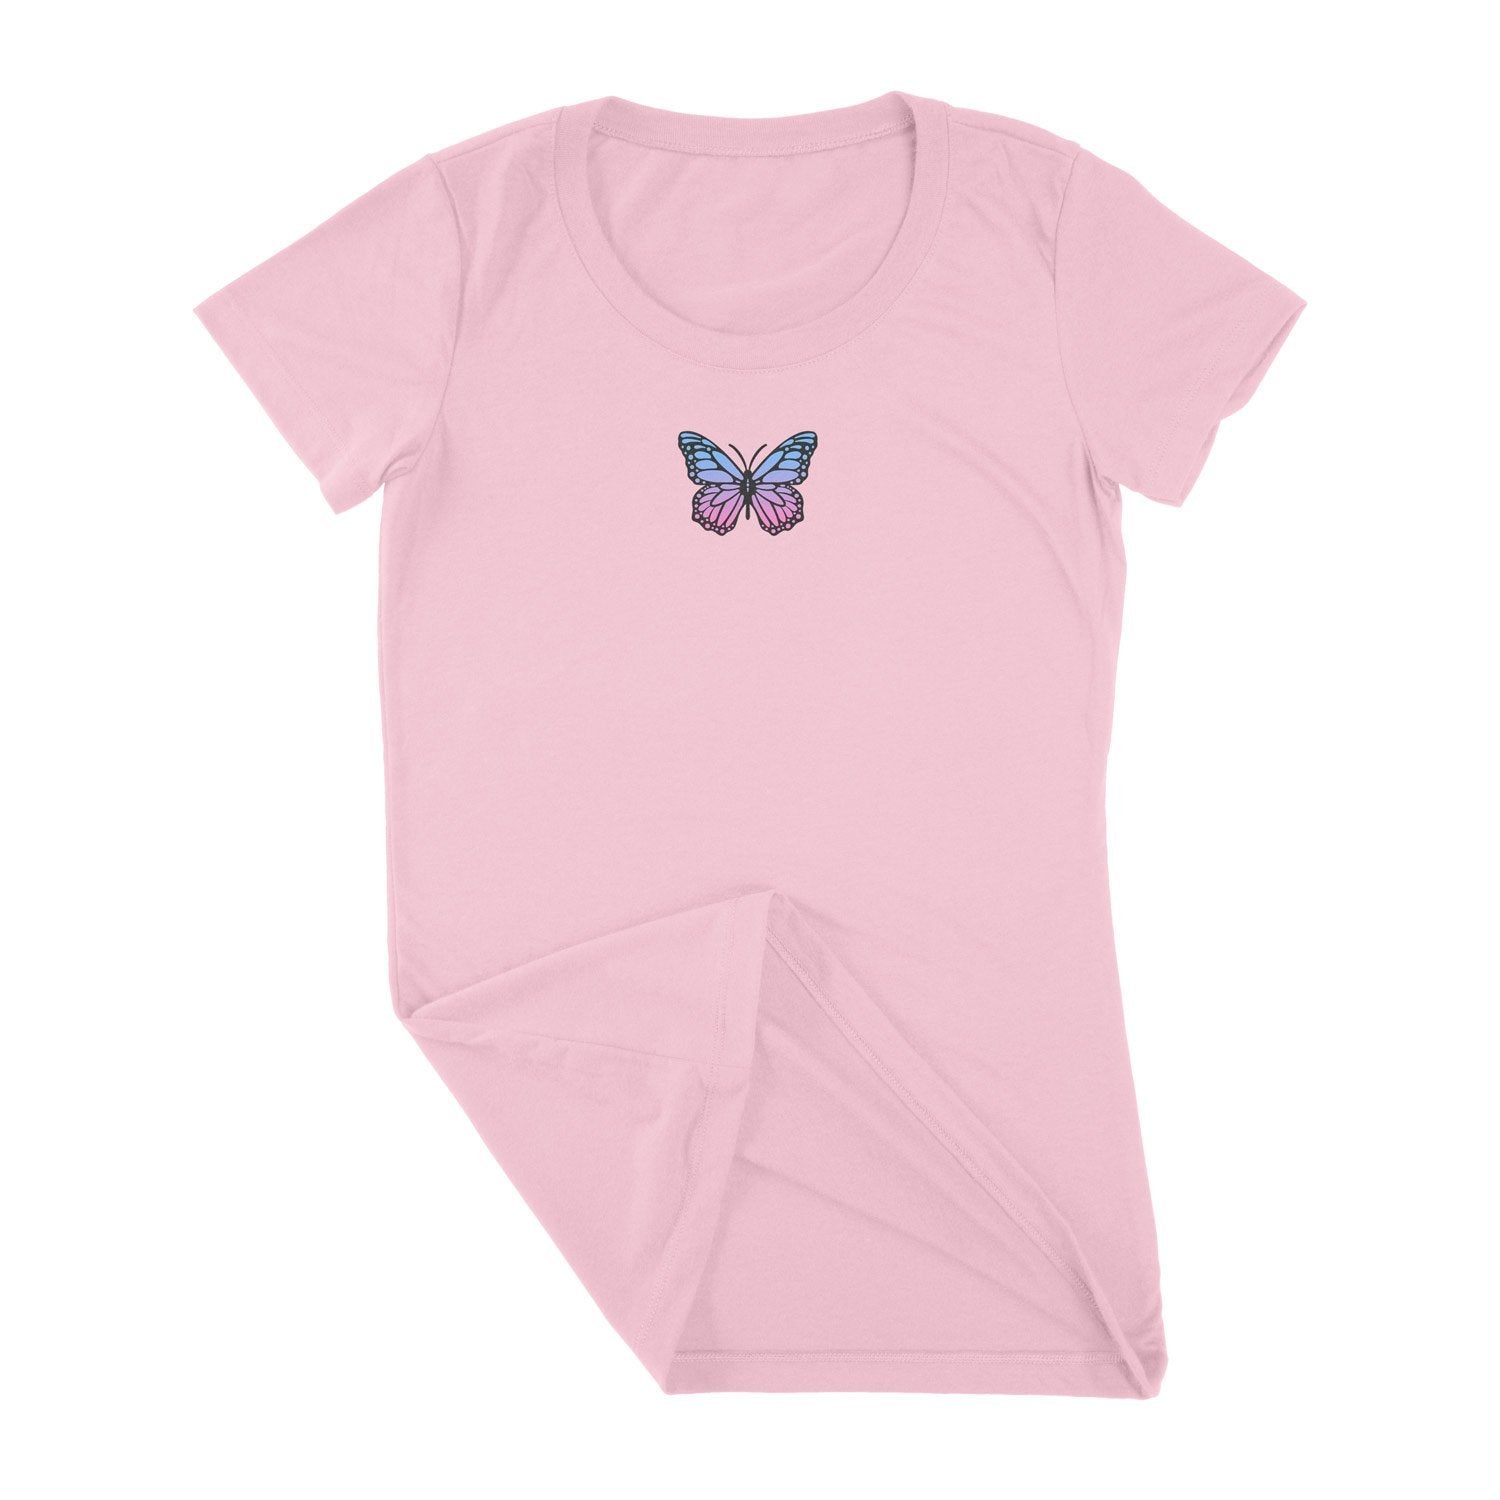 Butterfly Tee - My E ThreeT-shirt - My E Three